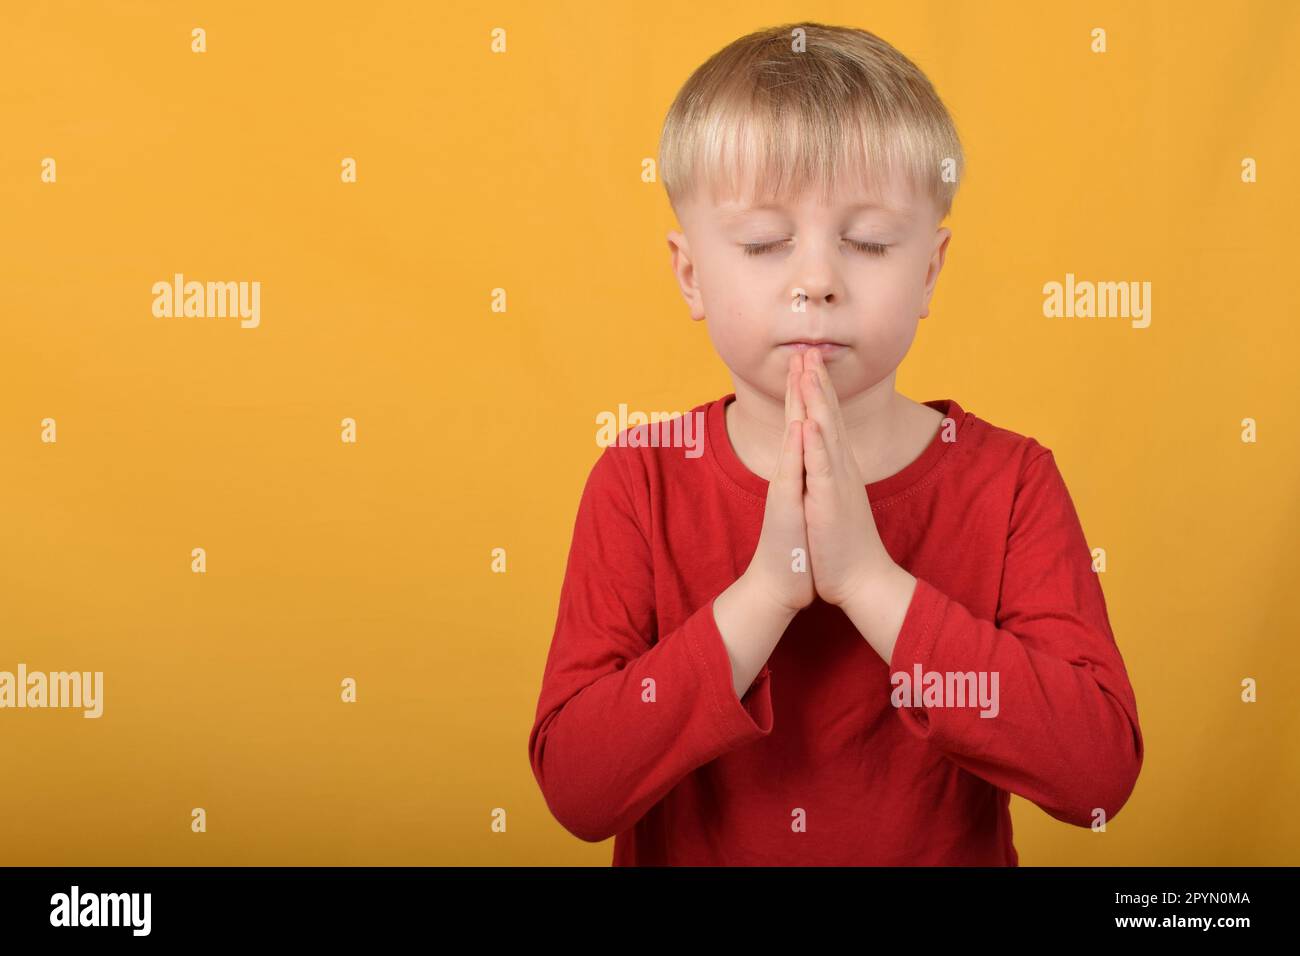 boy child praying Stock Photo